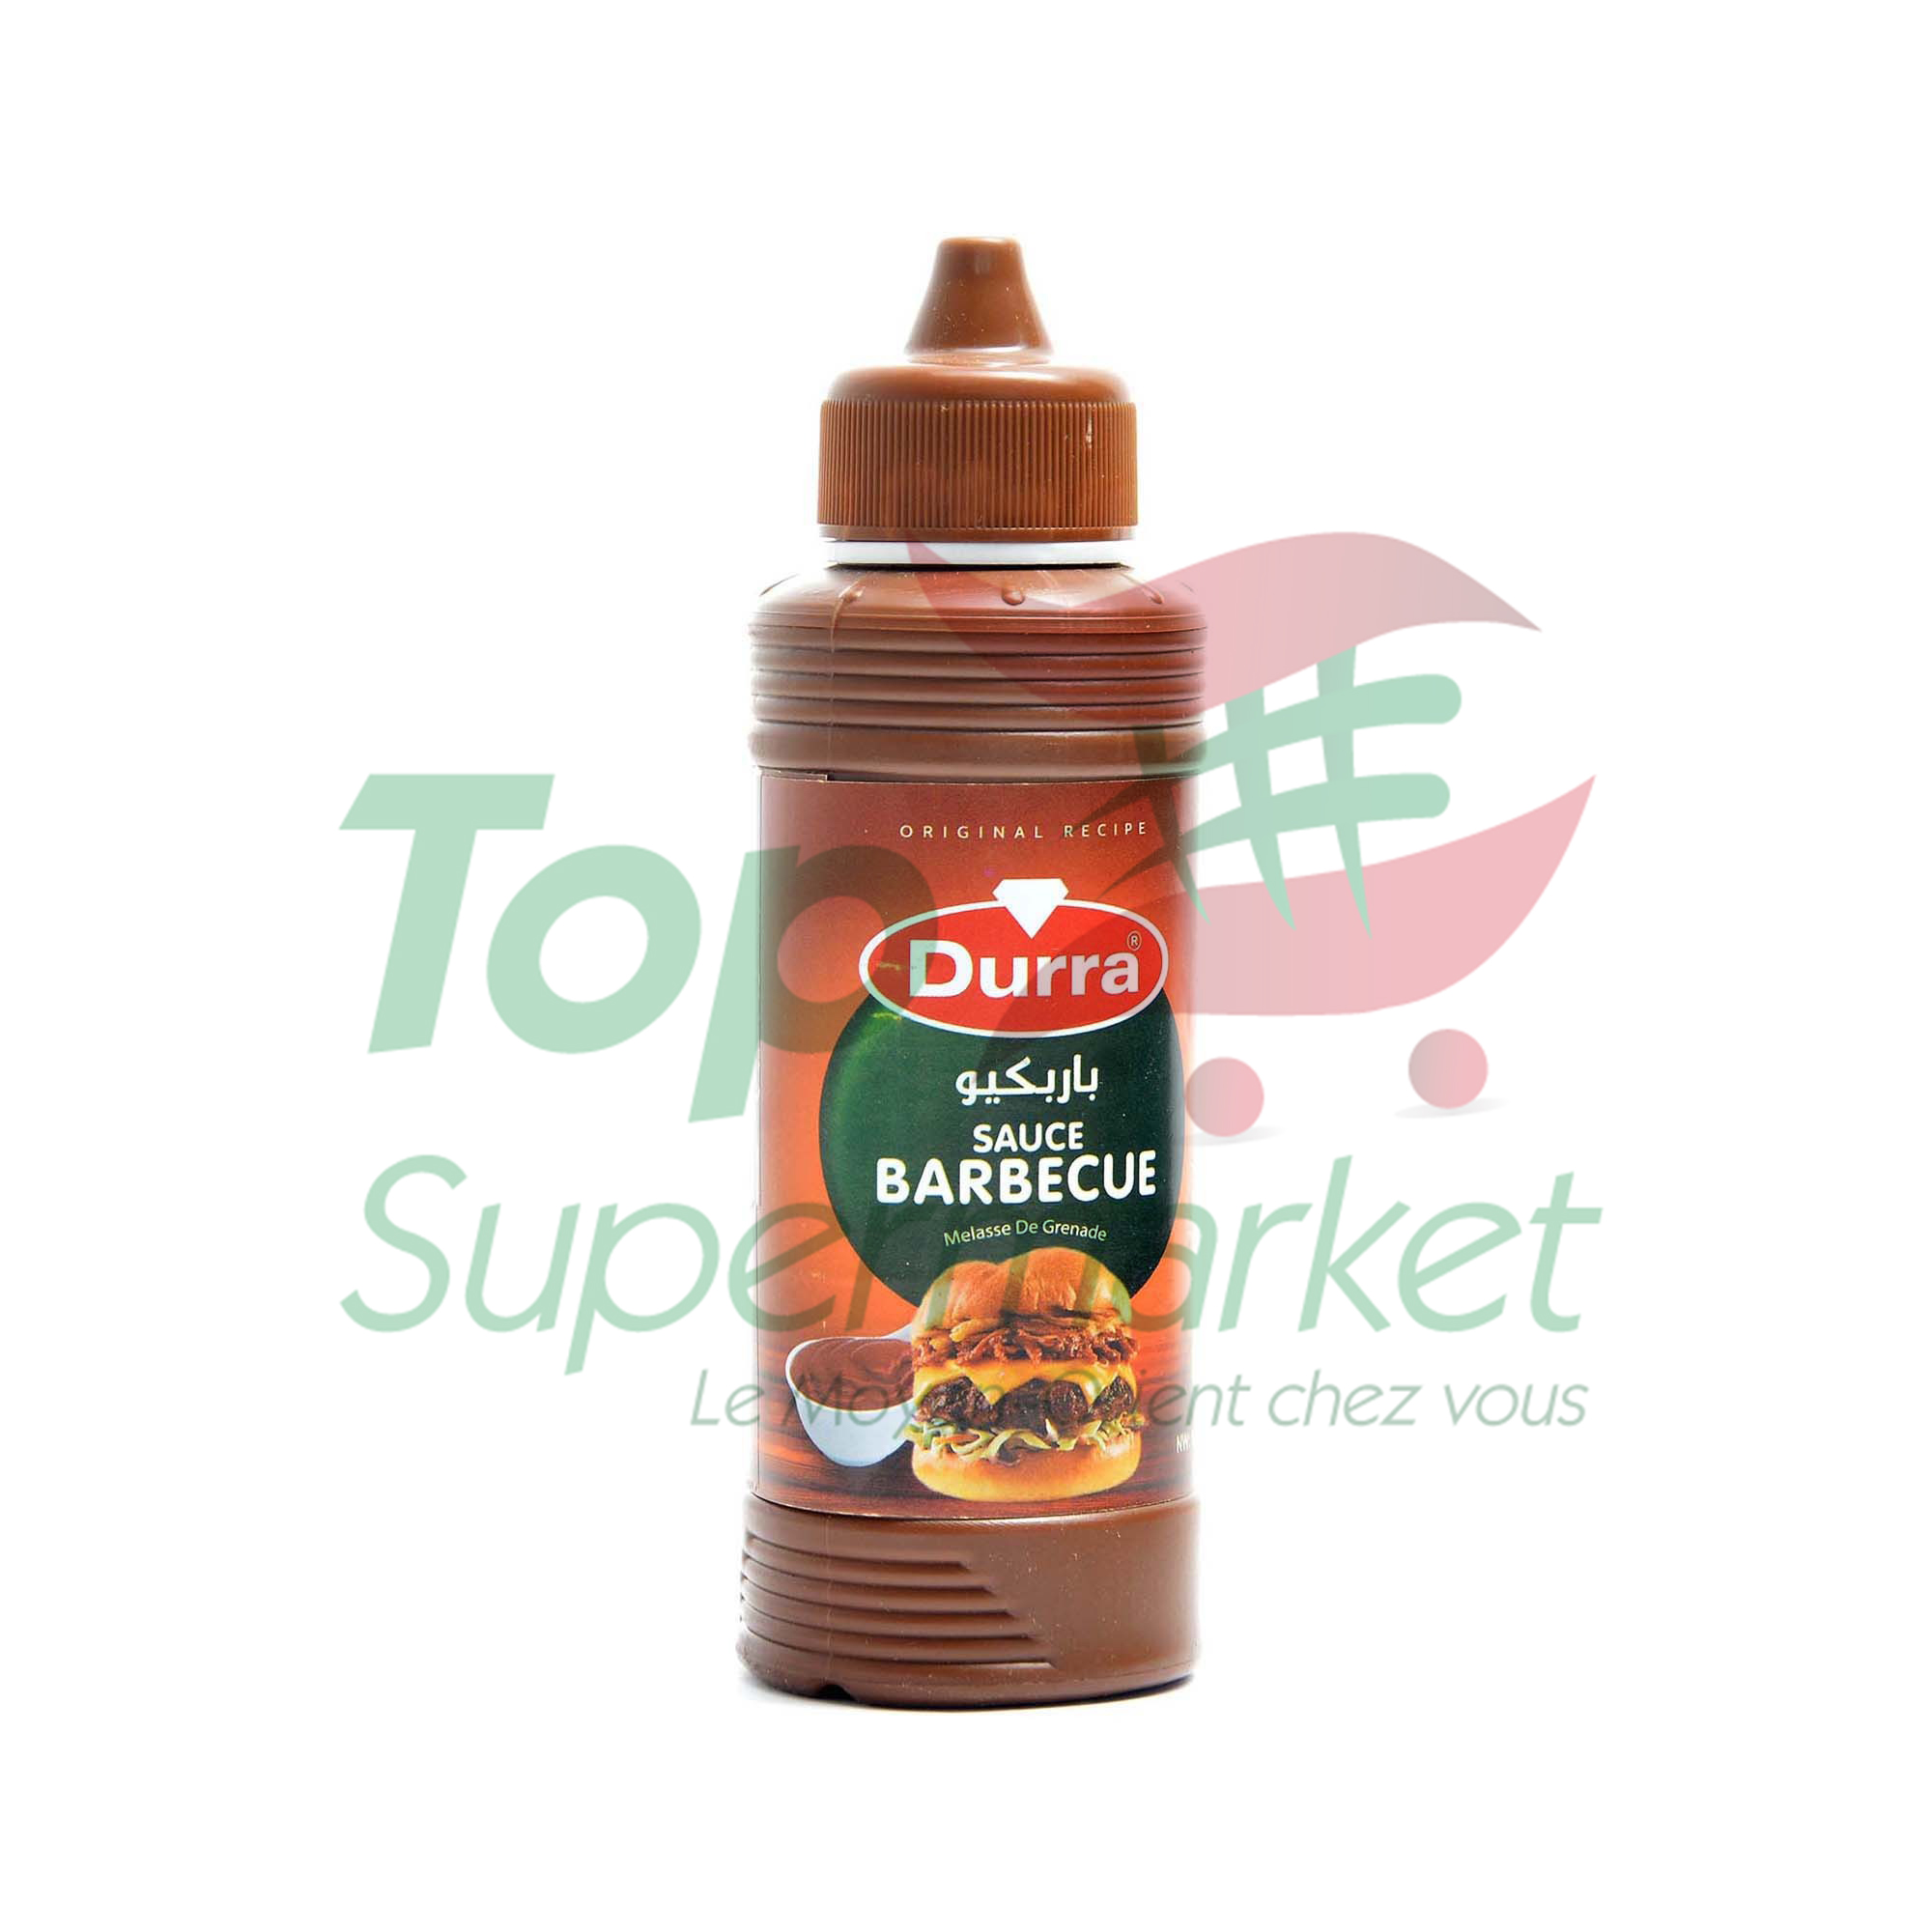 Durra sauce barbecue 290gr